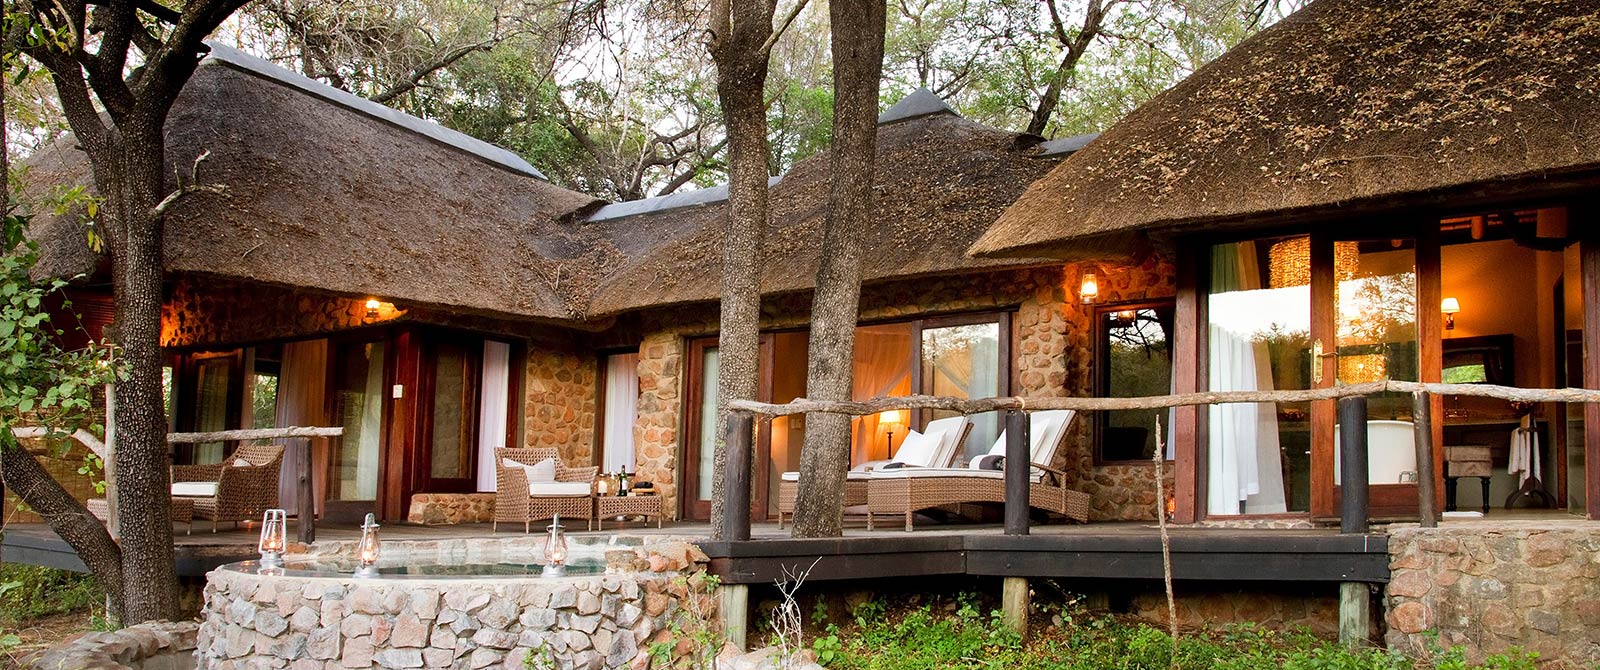 Big 5 Safari South Africa - Dulini Lodge Suite